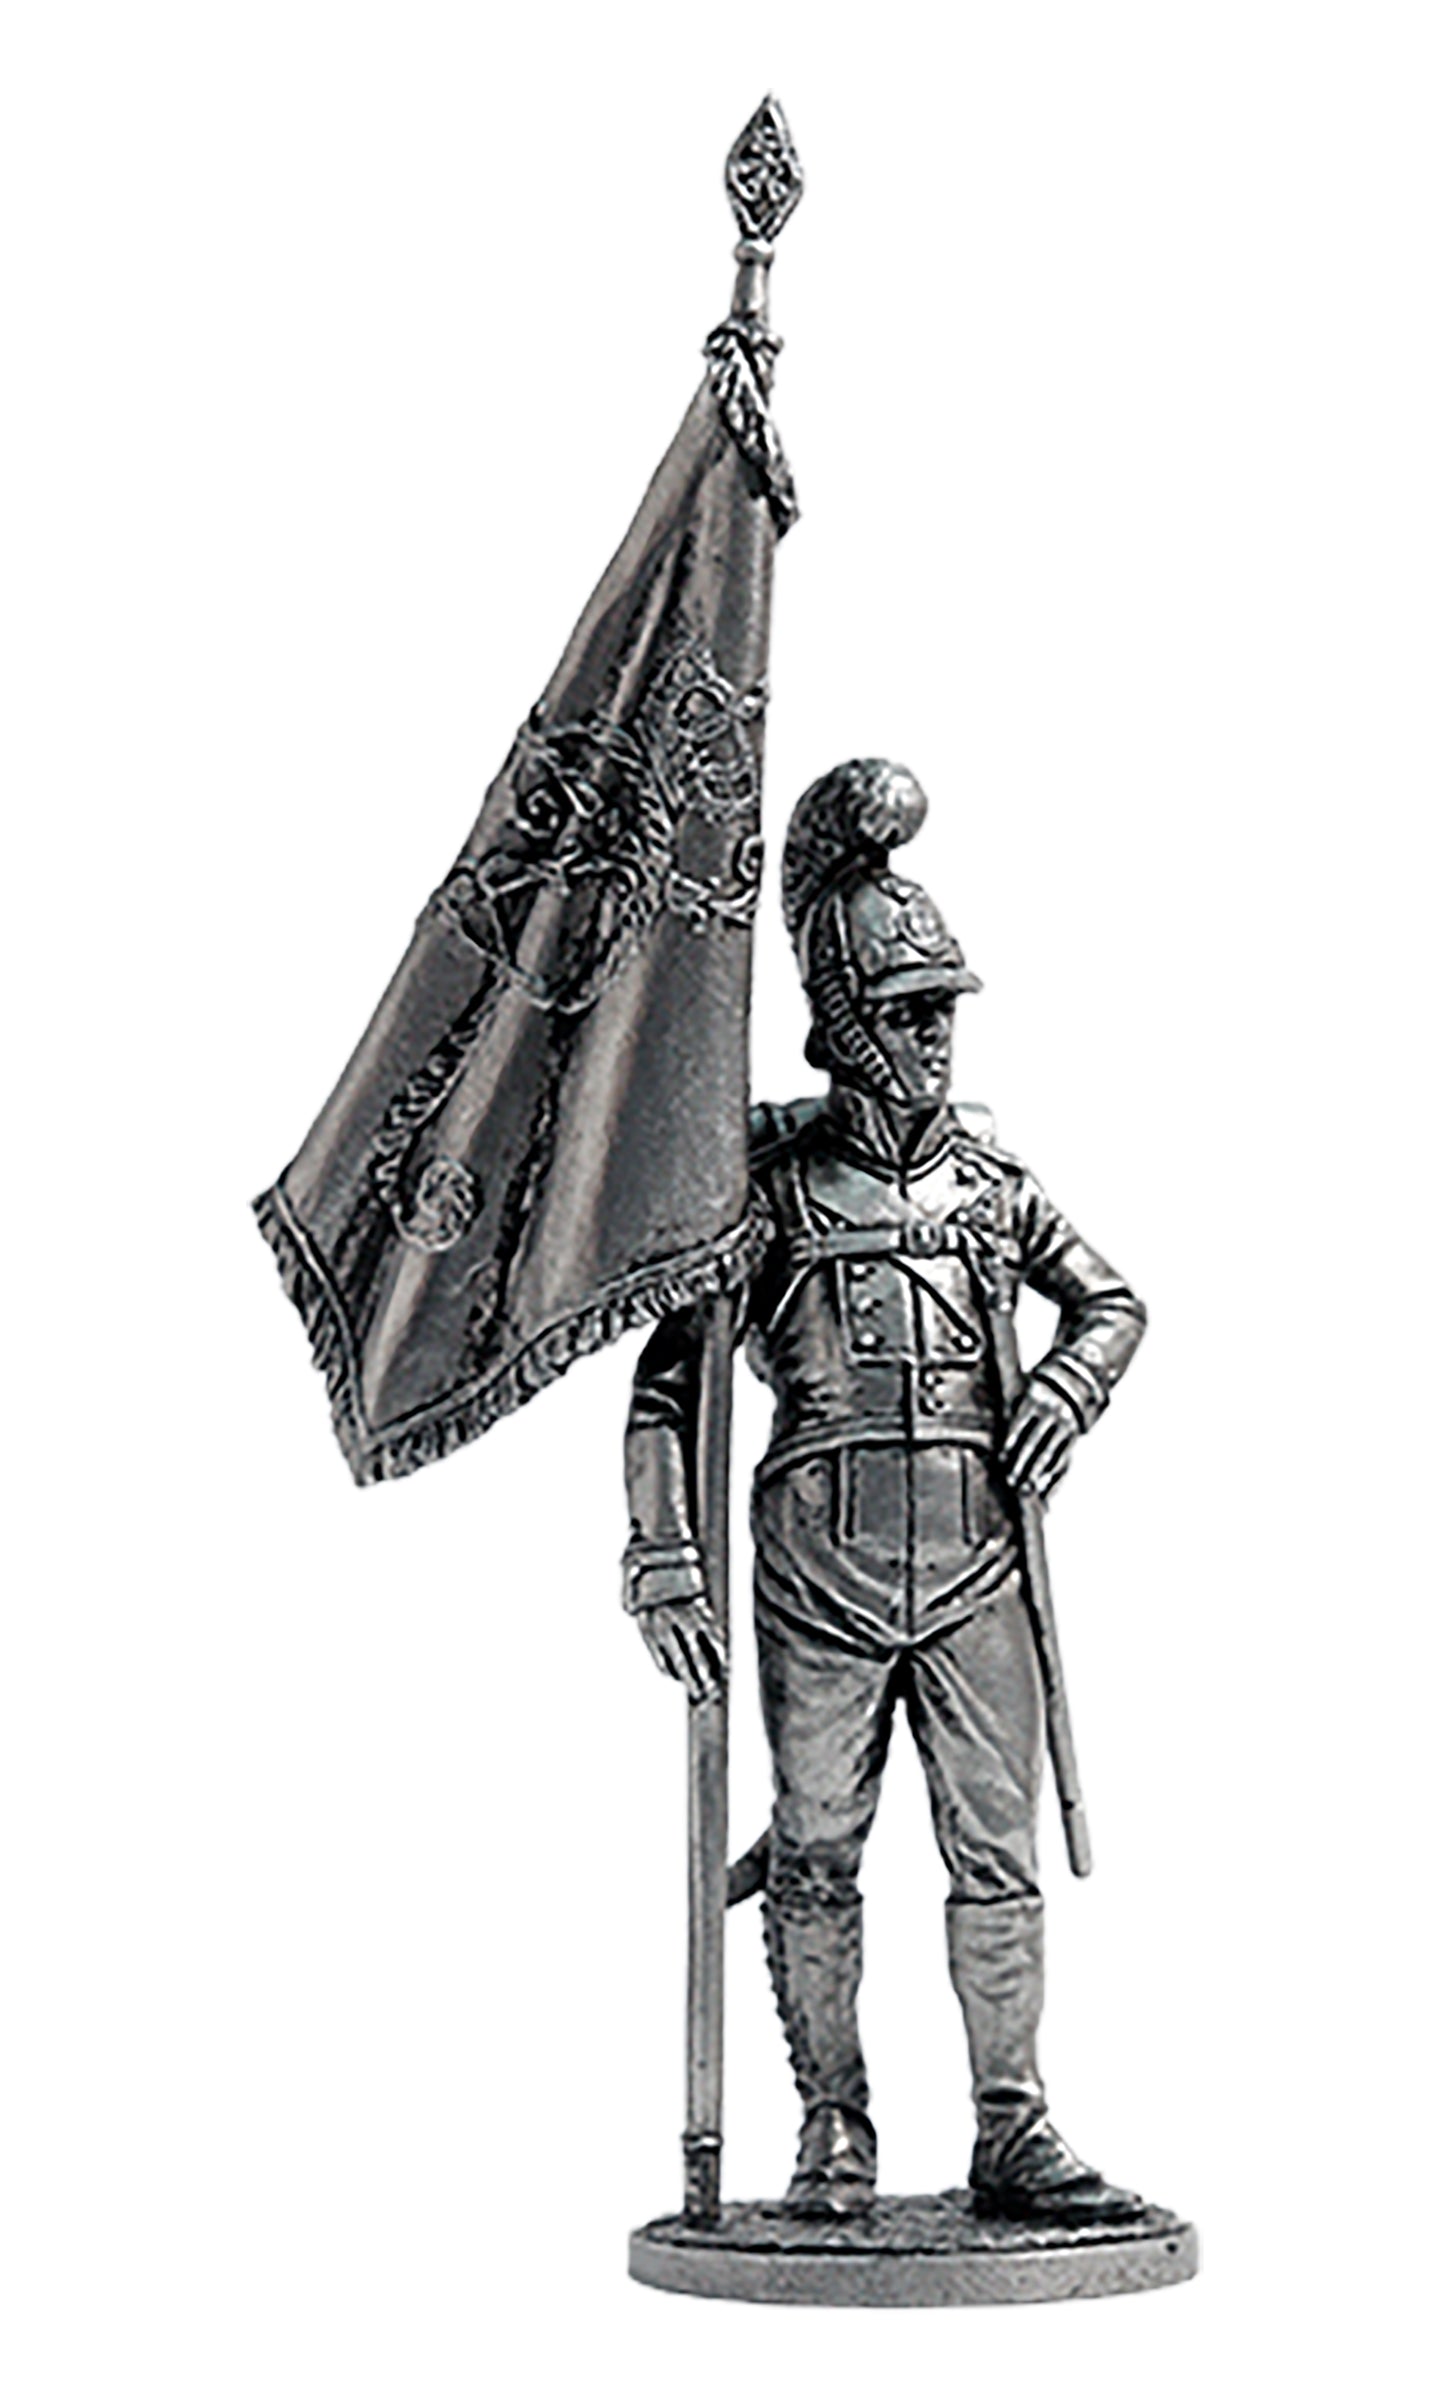 EK-NAP-63 - унтер-офицер, знаменосец 4-го пехотного полка фон Франкемона. Вюртемберг, 1811-12 гг.